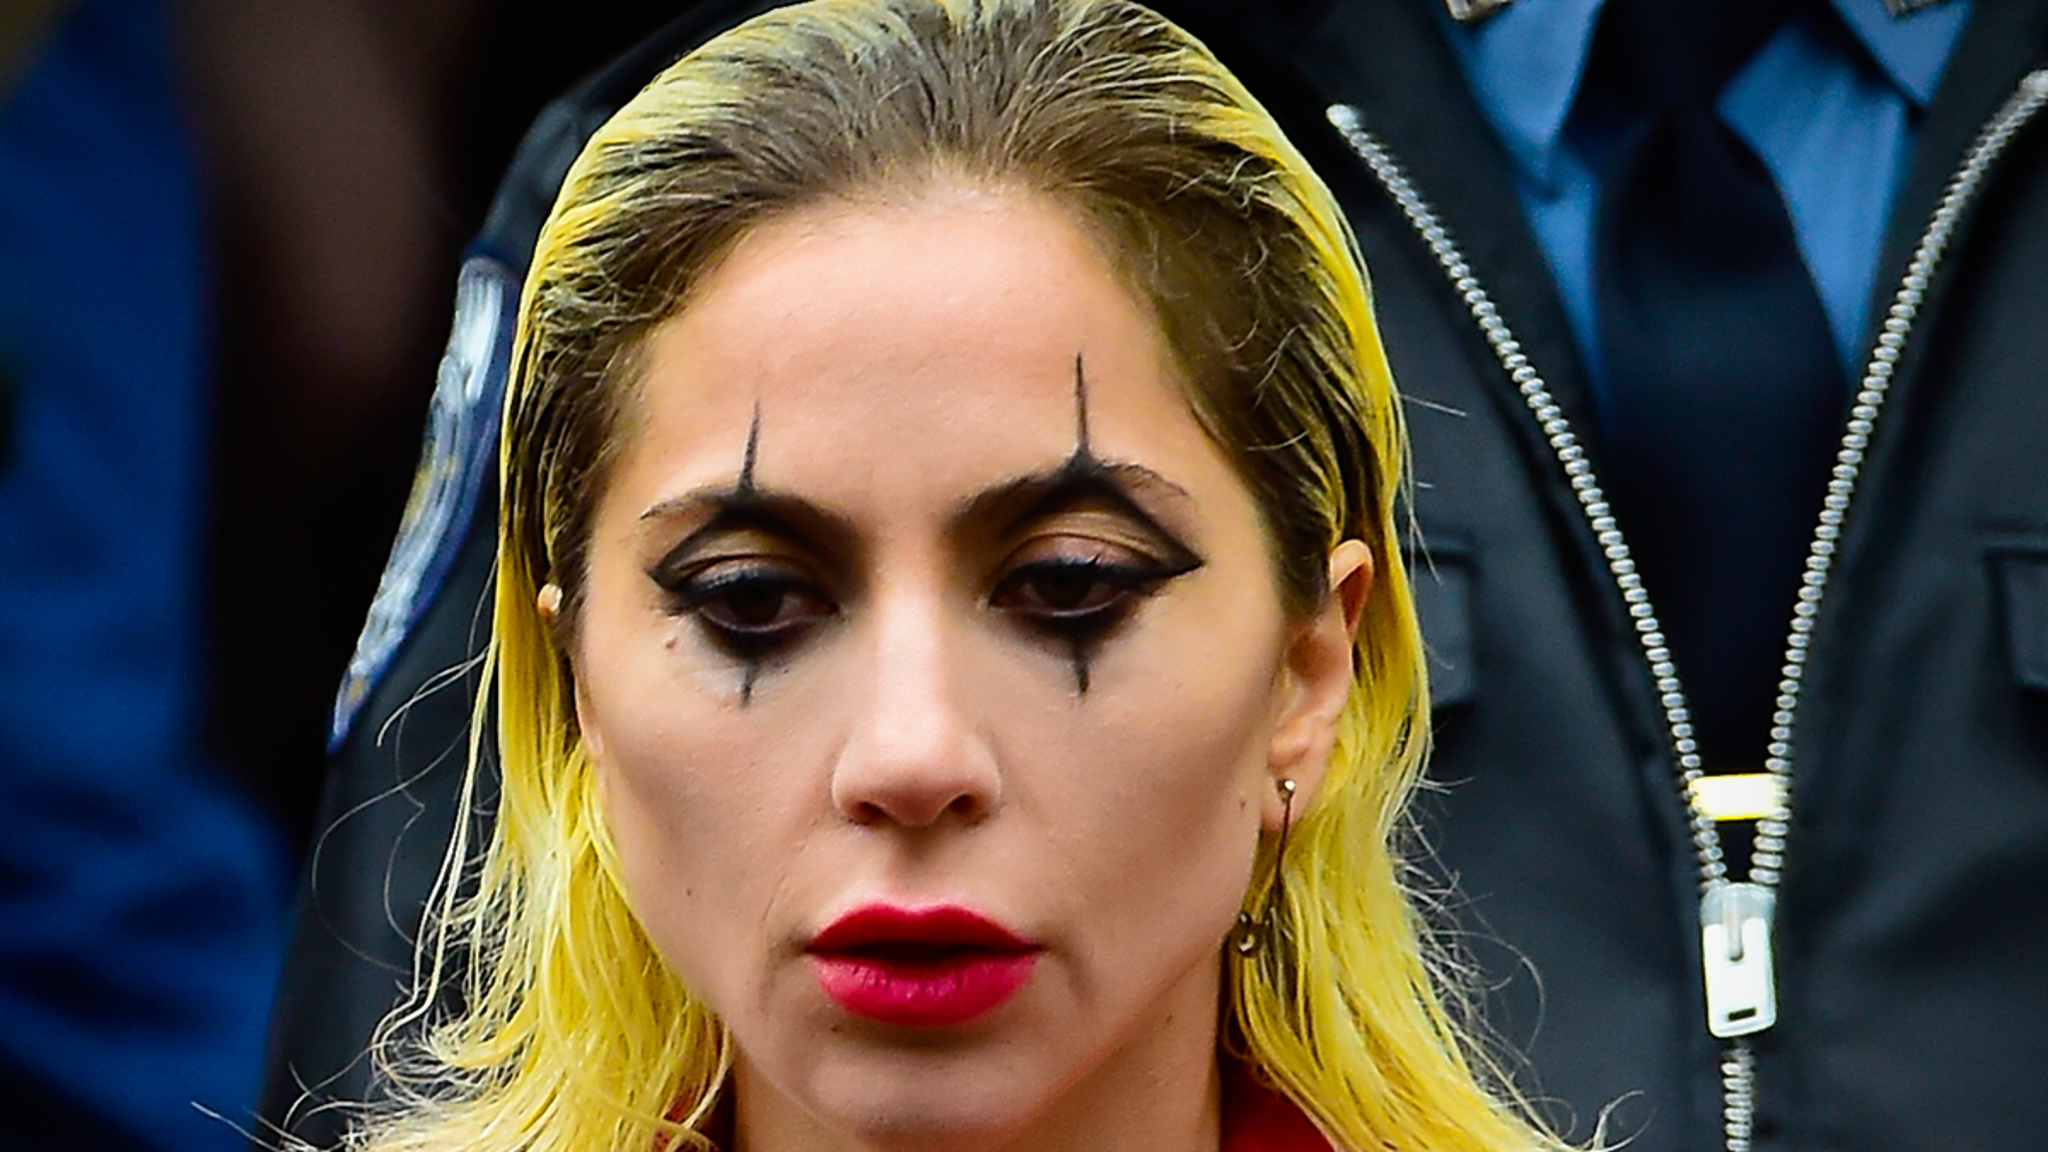 Lady Gaga in full costume and make-up as Harley Quinn in ‘Joker 2’.